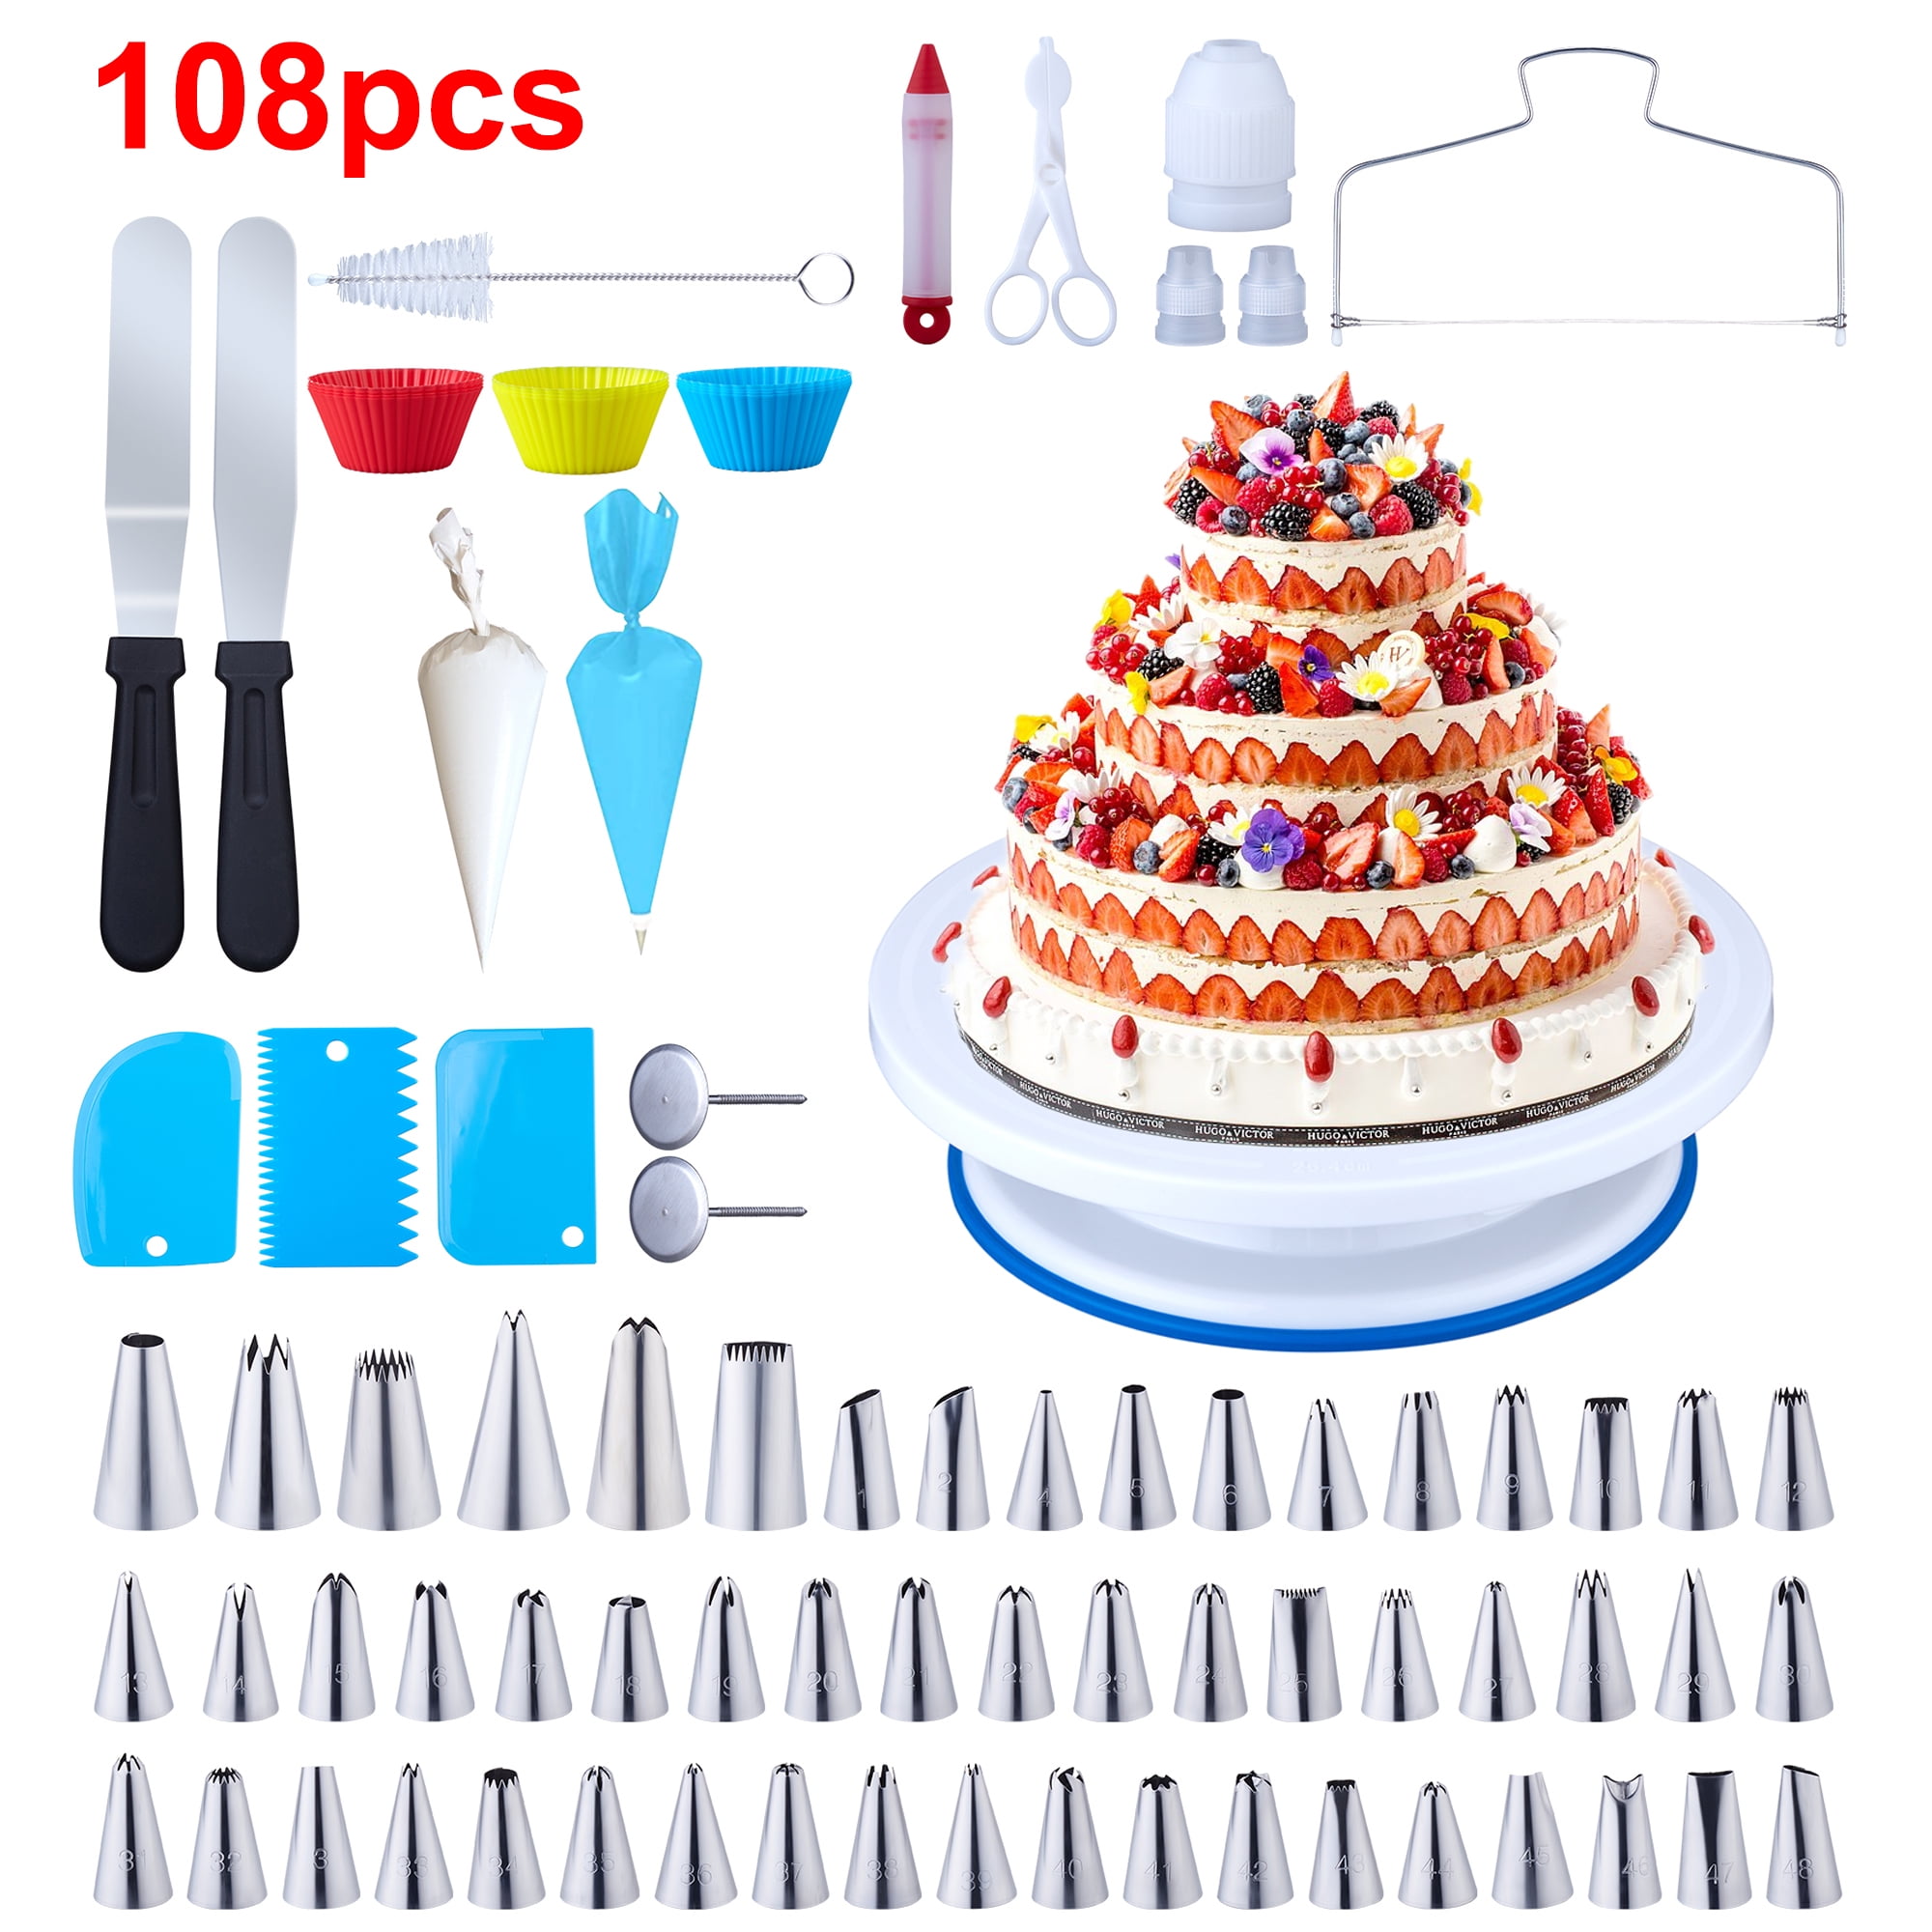 Uarter Cake Decorating Kit Supplies , 108 Pcs Cake Decorating Supplies Set  with Metal Cake Turntable Stand, 54 Pcs IcingTips for Beginners 